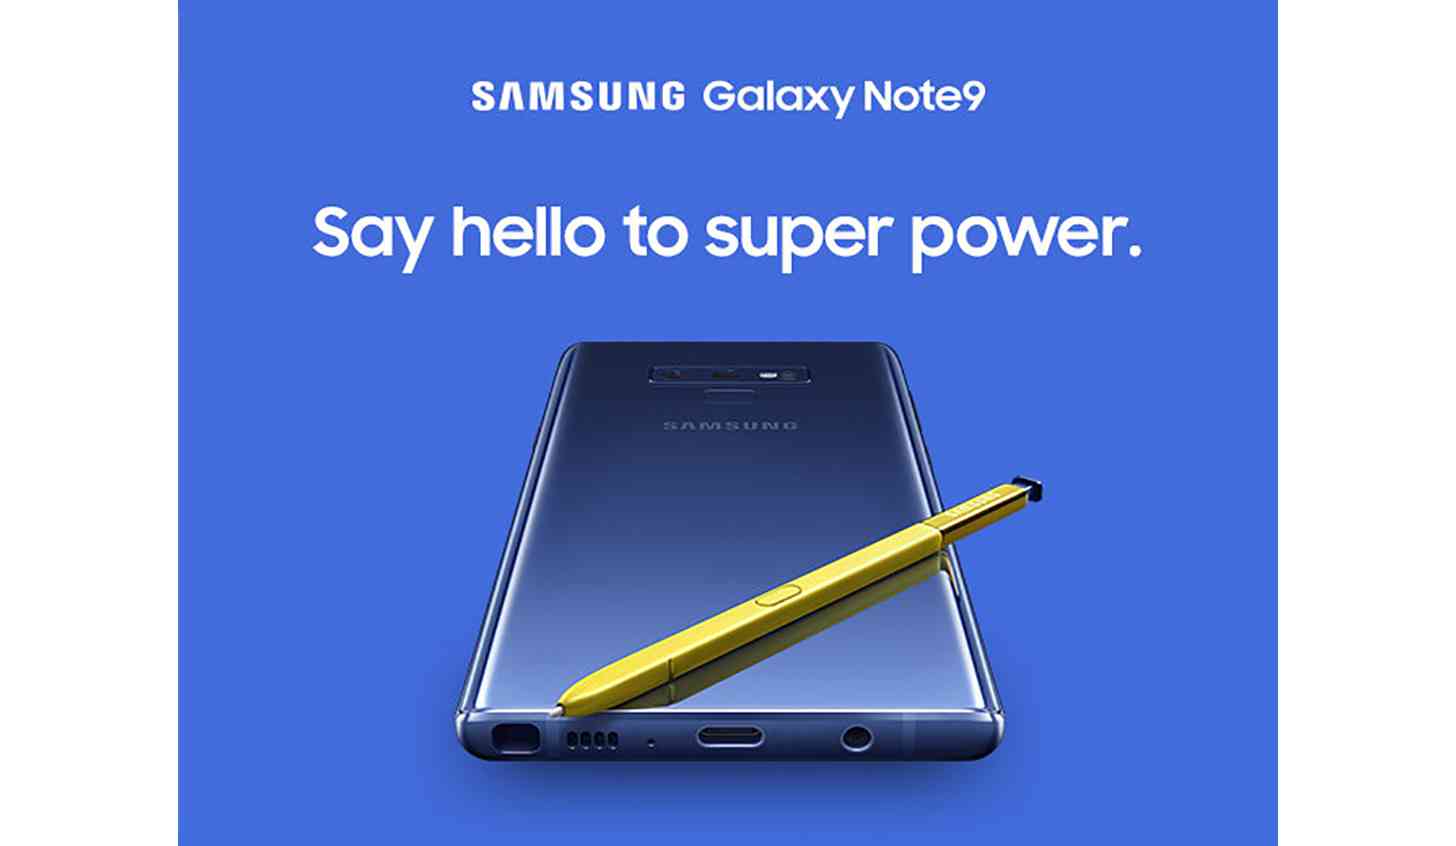 Samsung Galaxy Note 9 web page leak